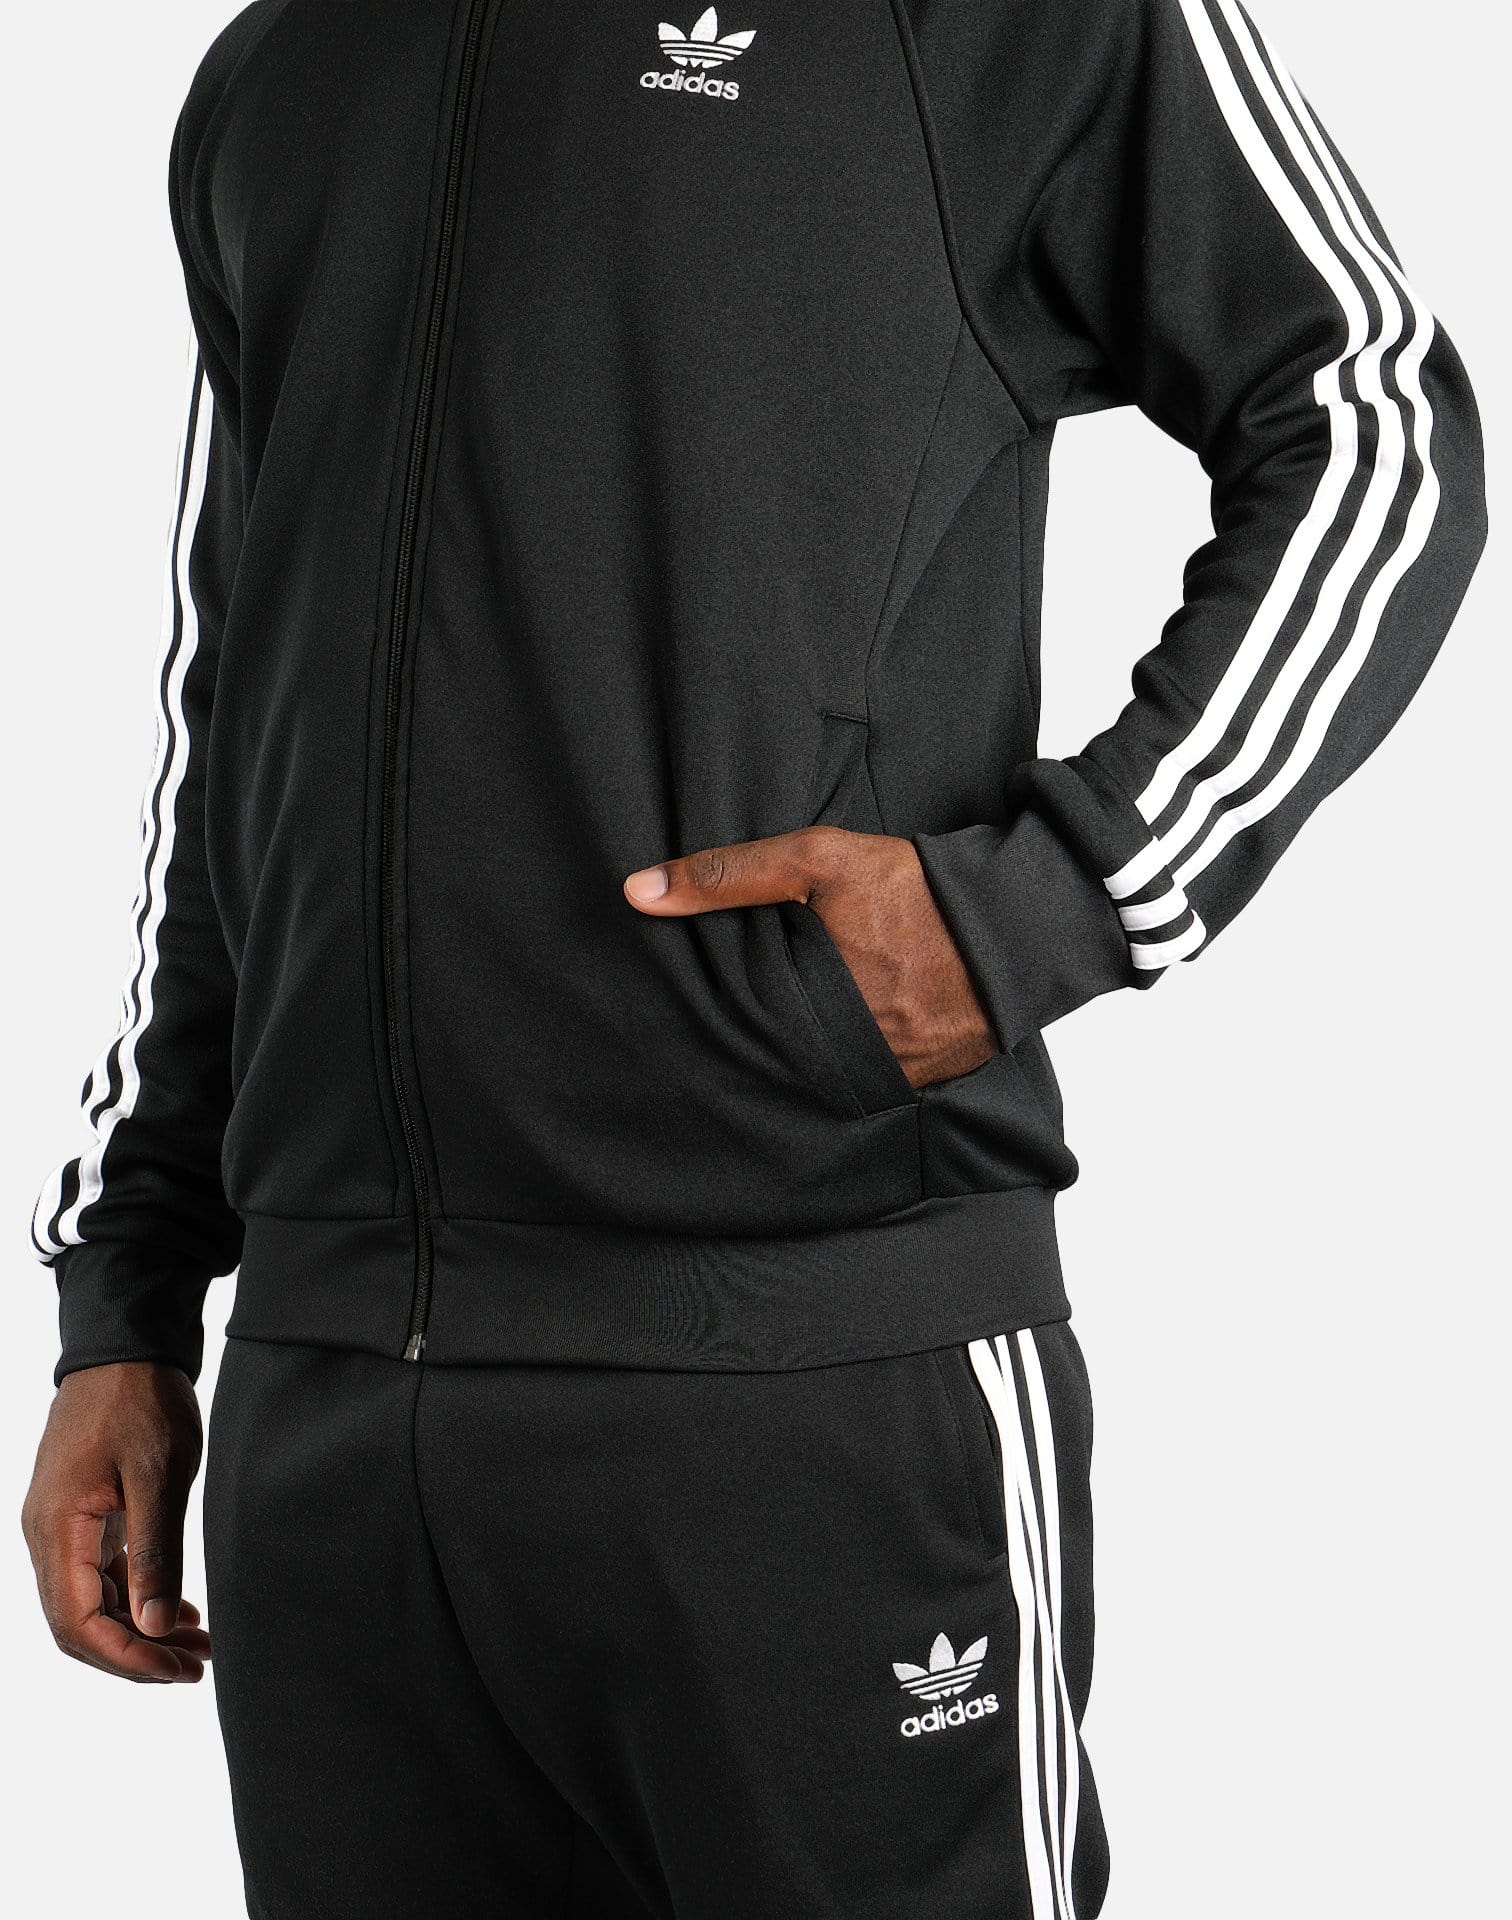 adidas Superstar Track Jacket (Black)